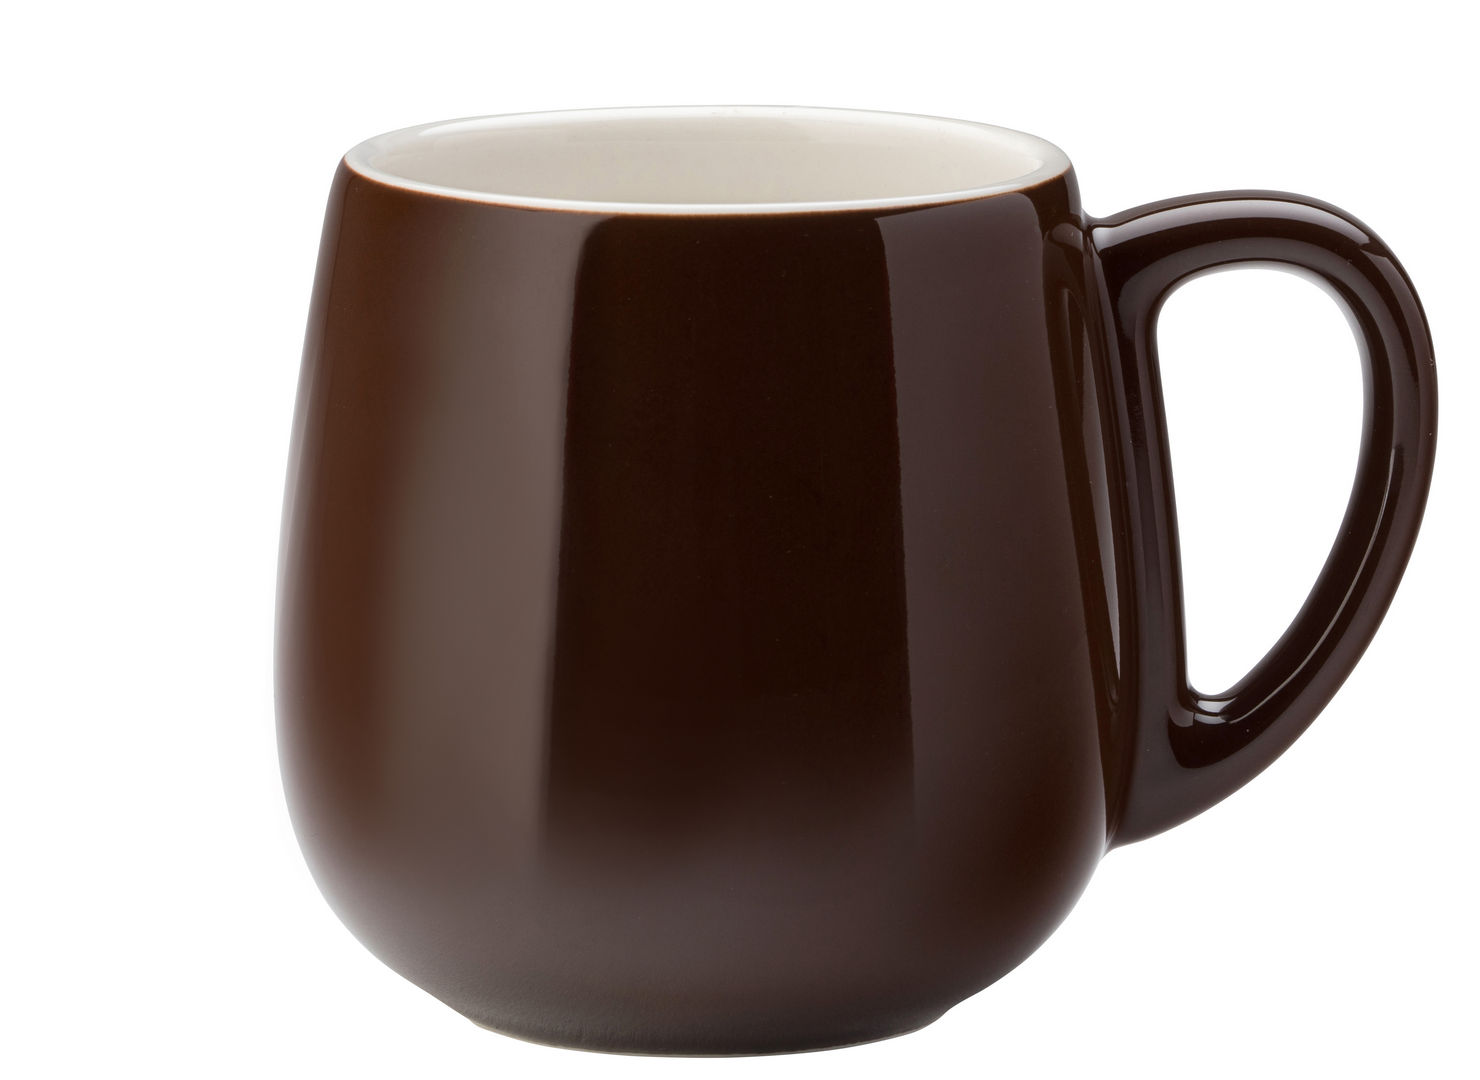 Barista Brown Mug 15oz (42cl) - CT9027-000000-B01006 (Pack of 6)